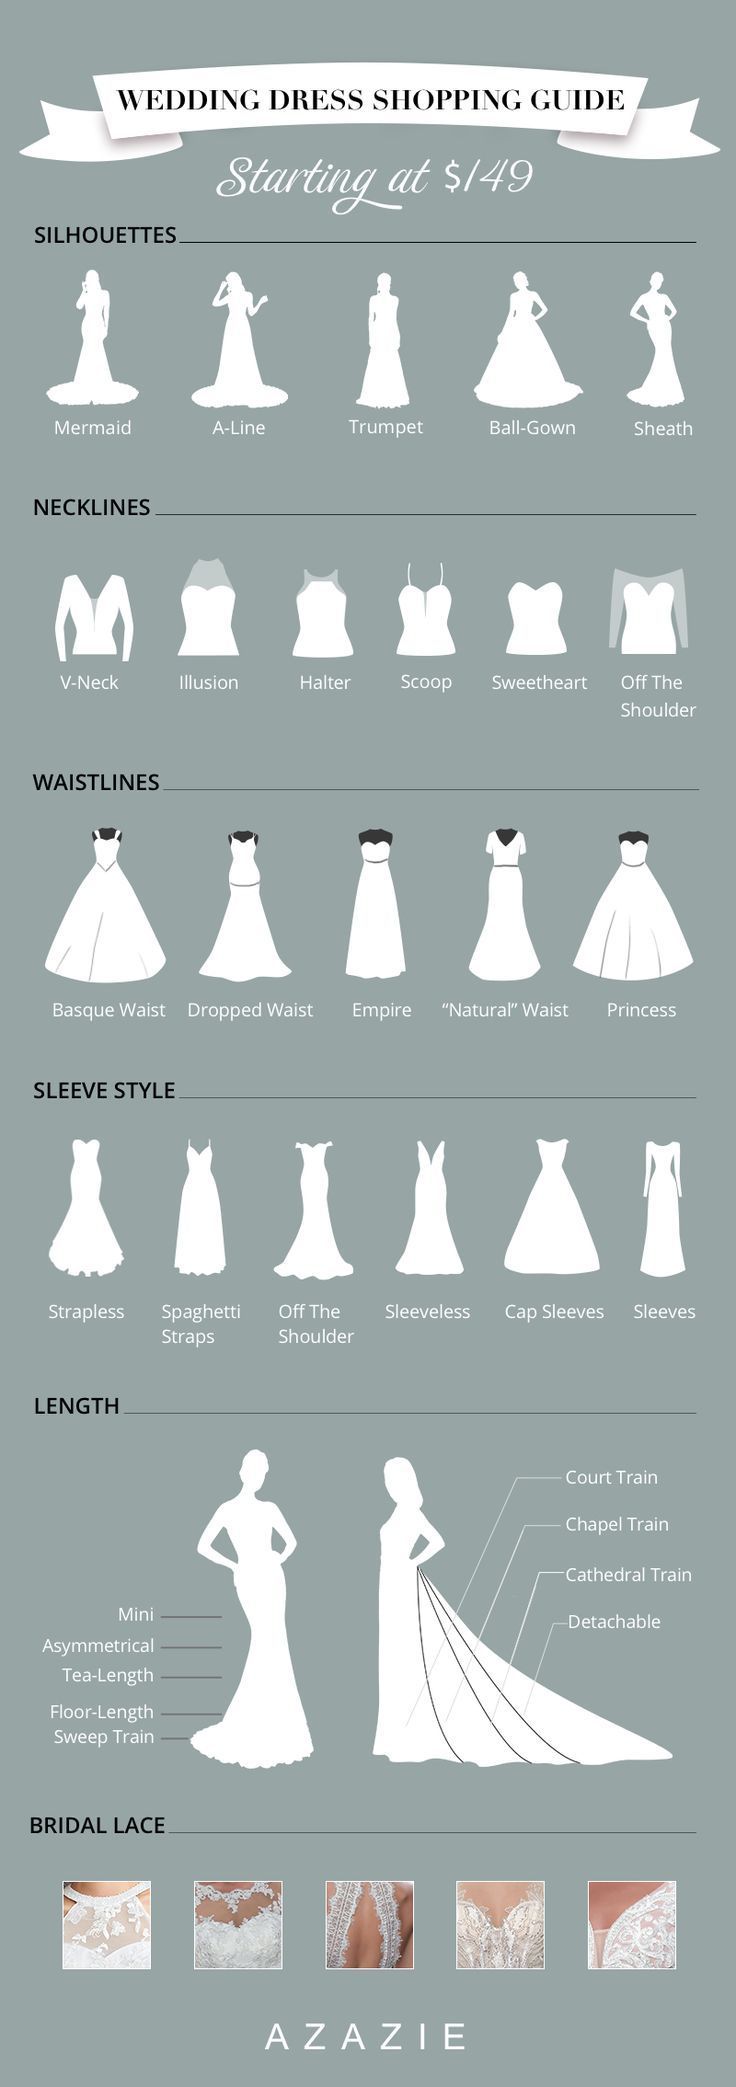 Wedding Dresses, Bridal Gowns, Wedding Gowns | Azazie -   17 wedding style Guides ideas